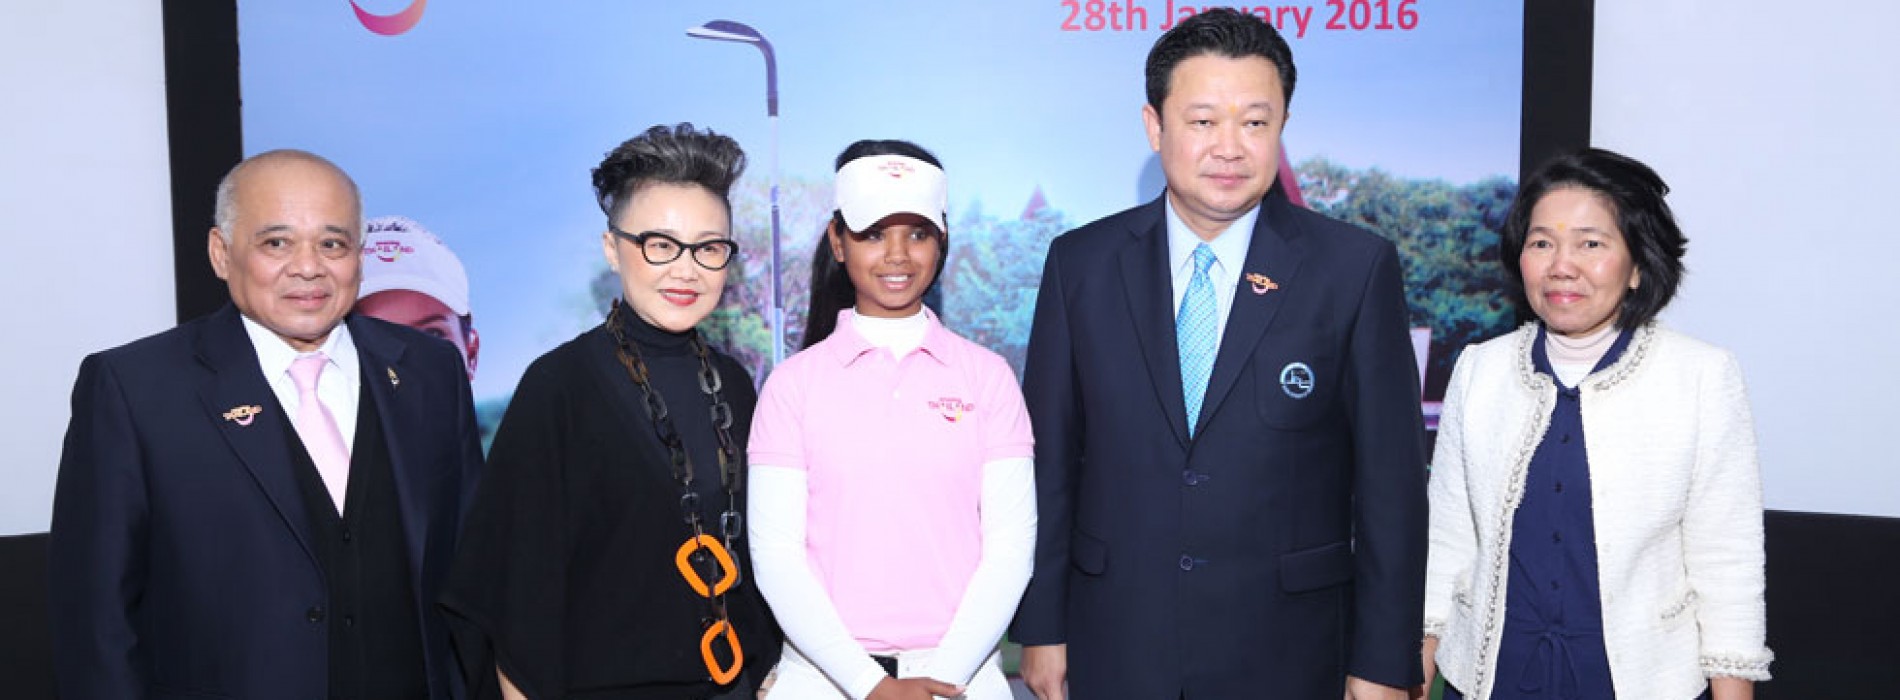 Thailand Appoints Indian Female Golfer as Thailand Golf Ambassador